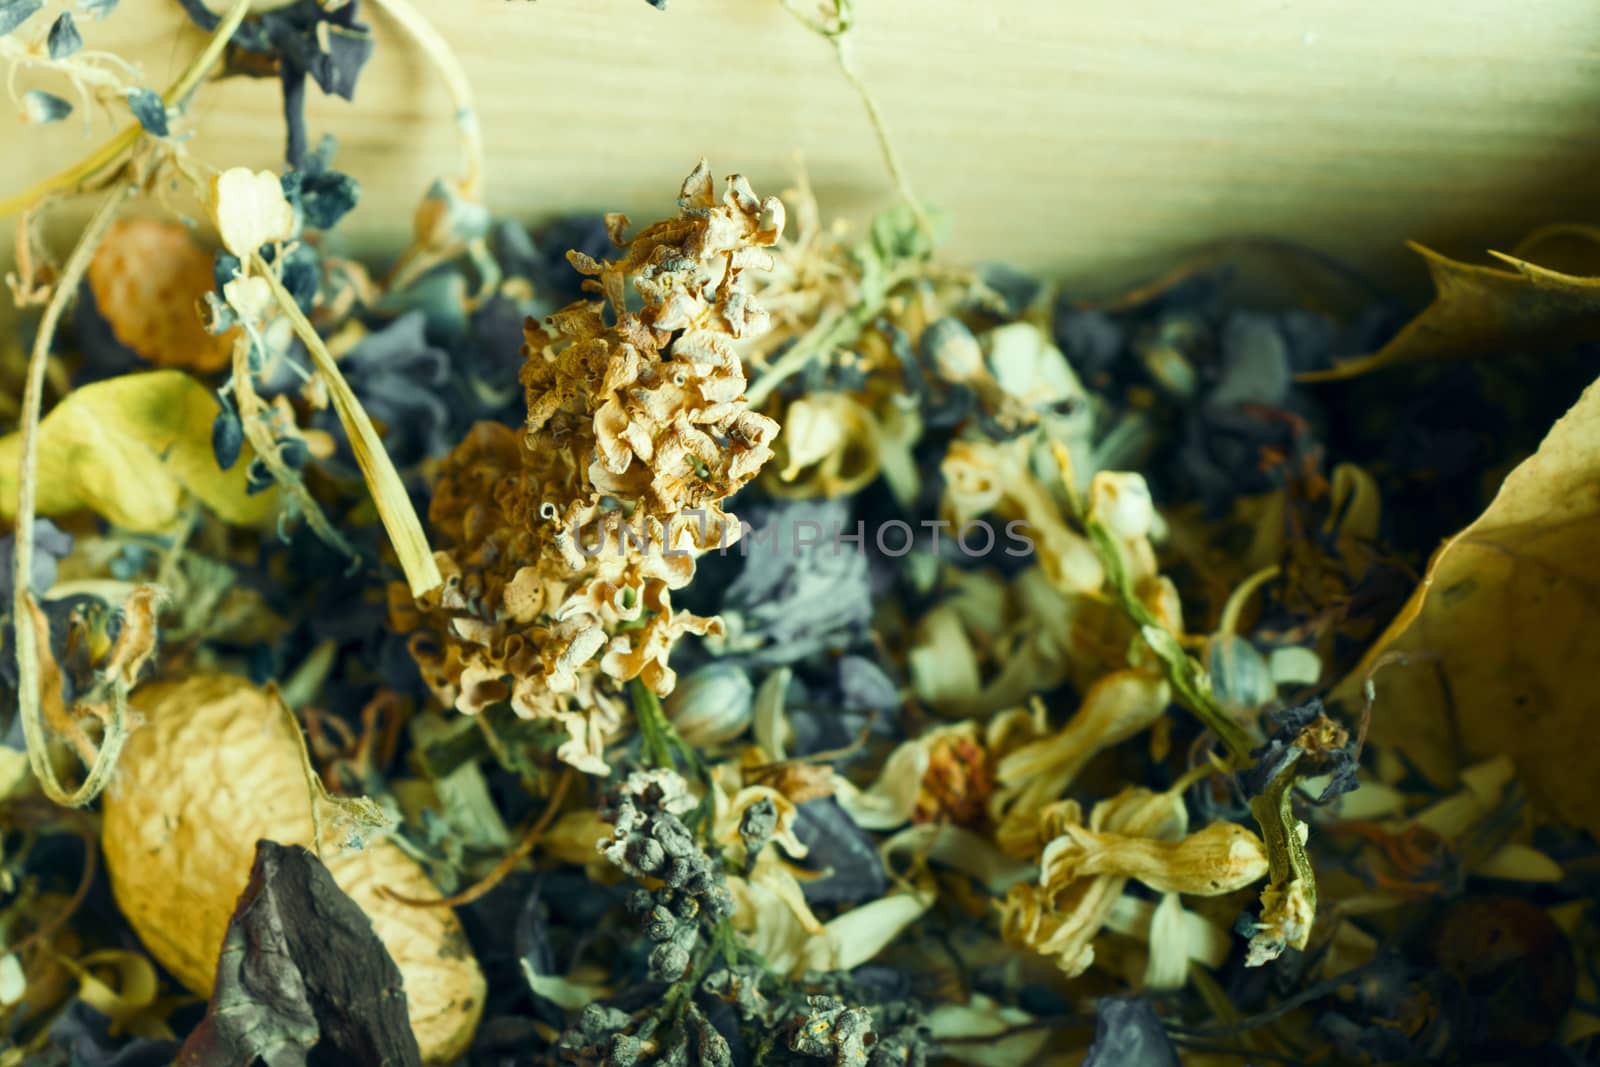 Dry flowers and plants, herbal tea by Taidundua